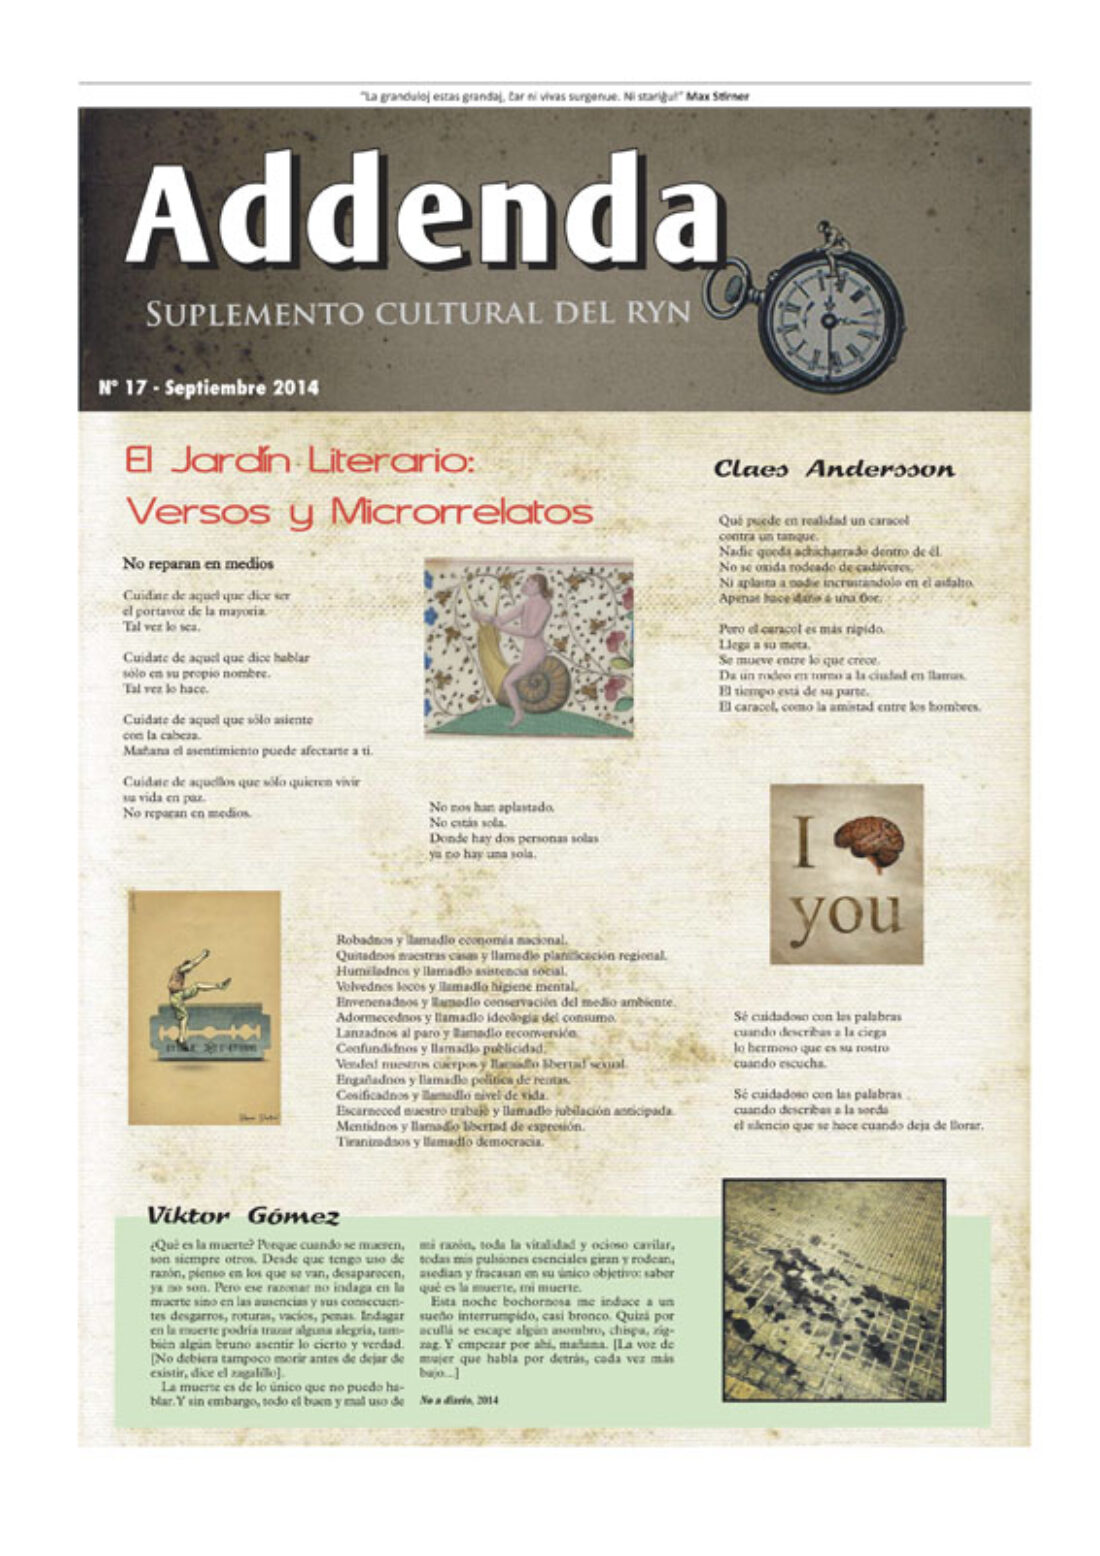 Addenda, suplemento cultural del RyN – Nº 17, septiembre 2014